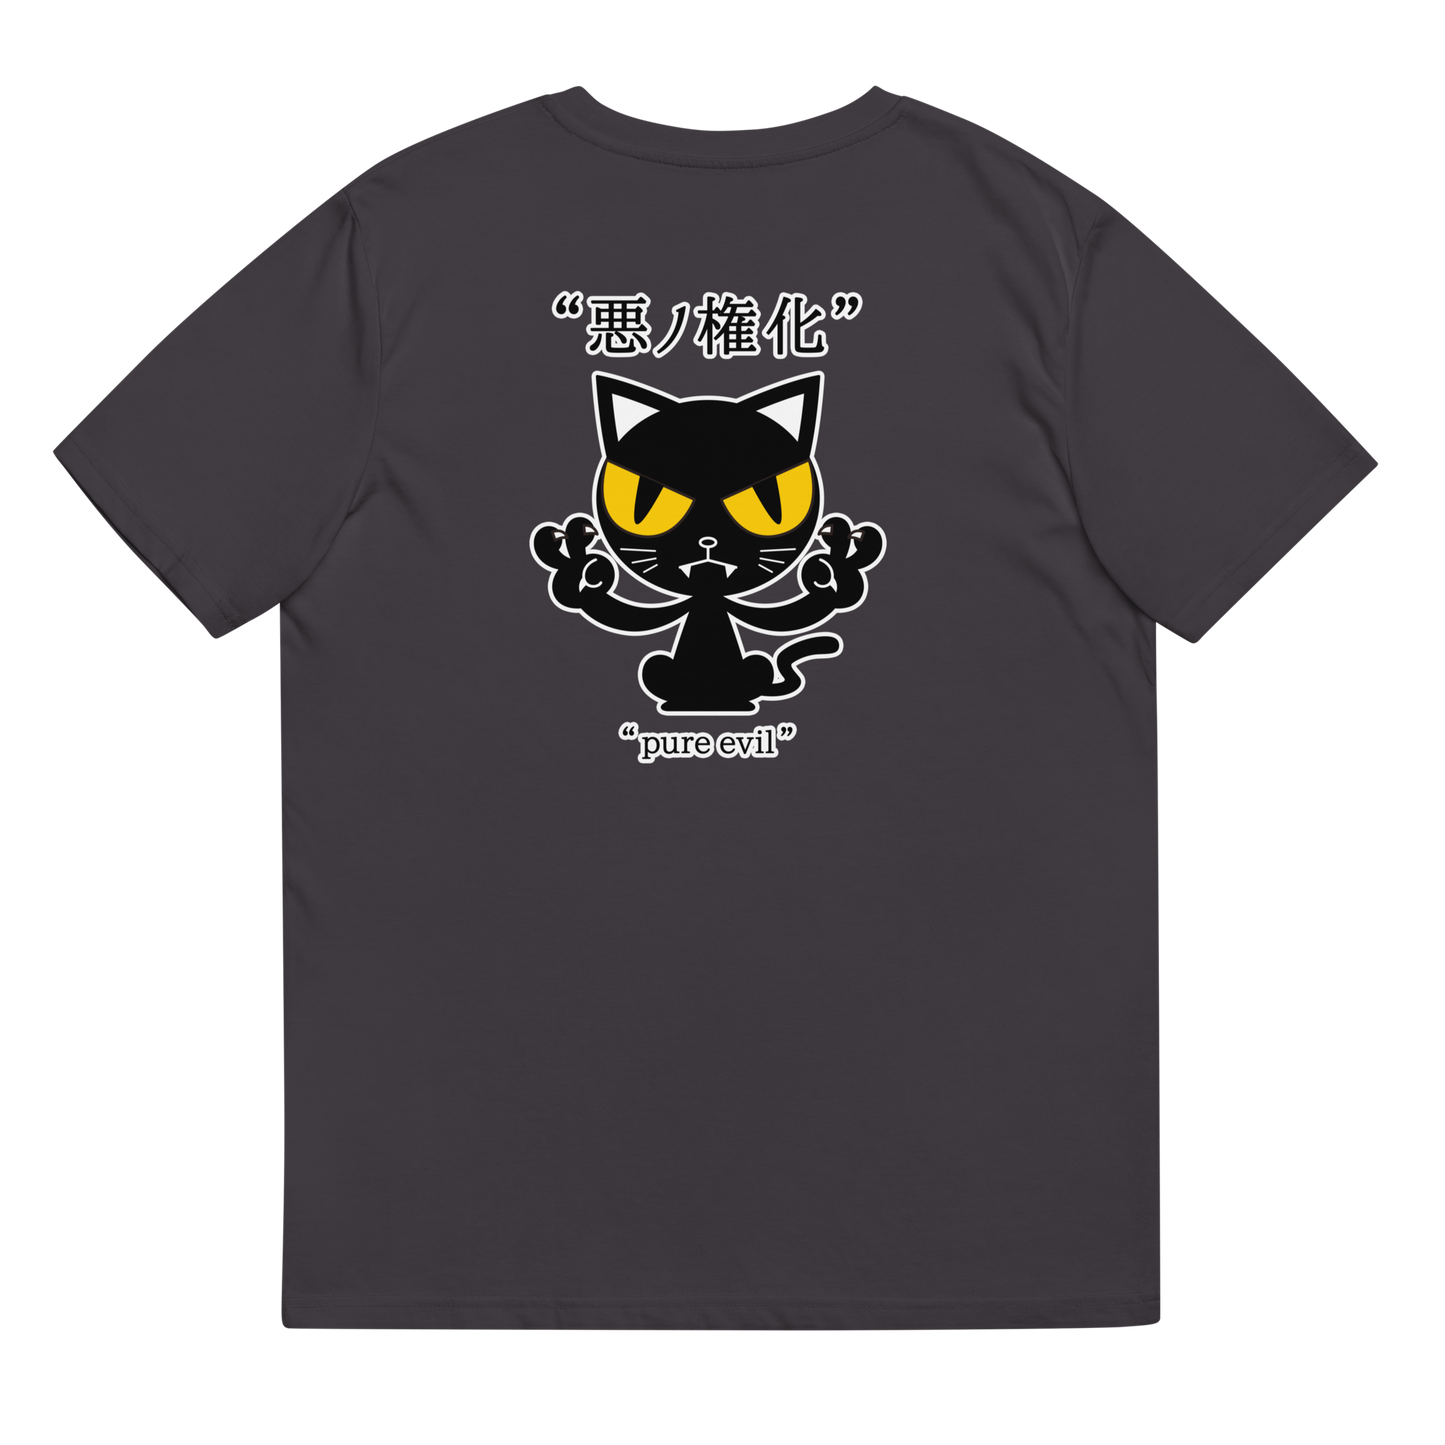 [Inkarnation des Bösen] T-Shirt pure evil (unisex)